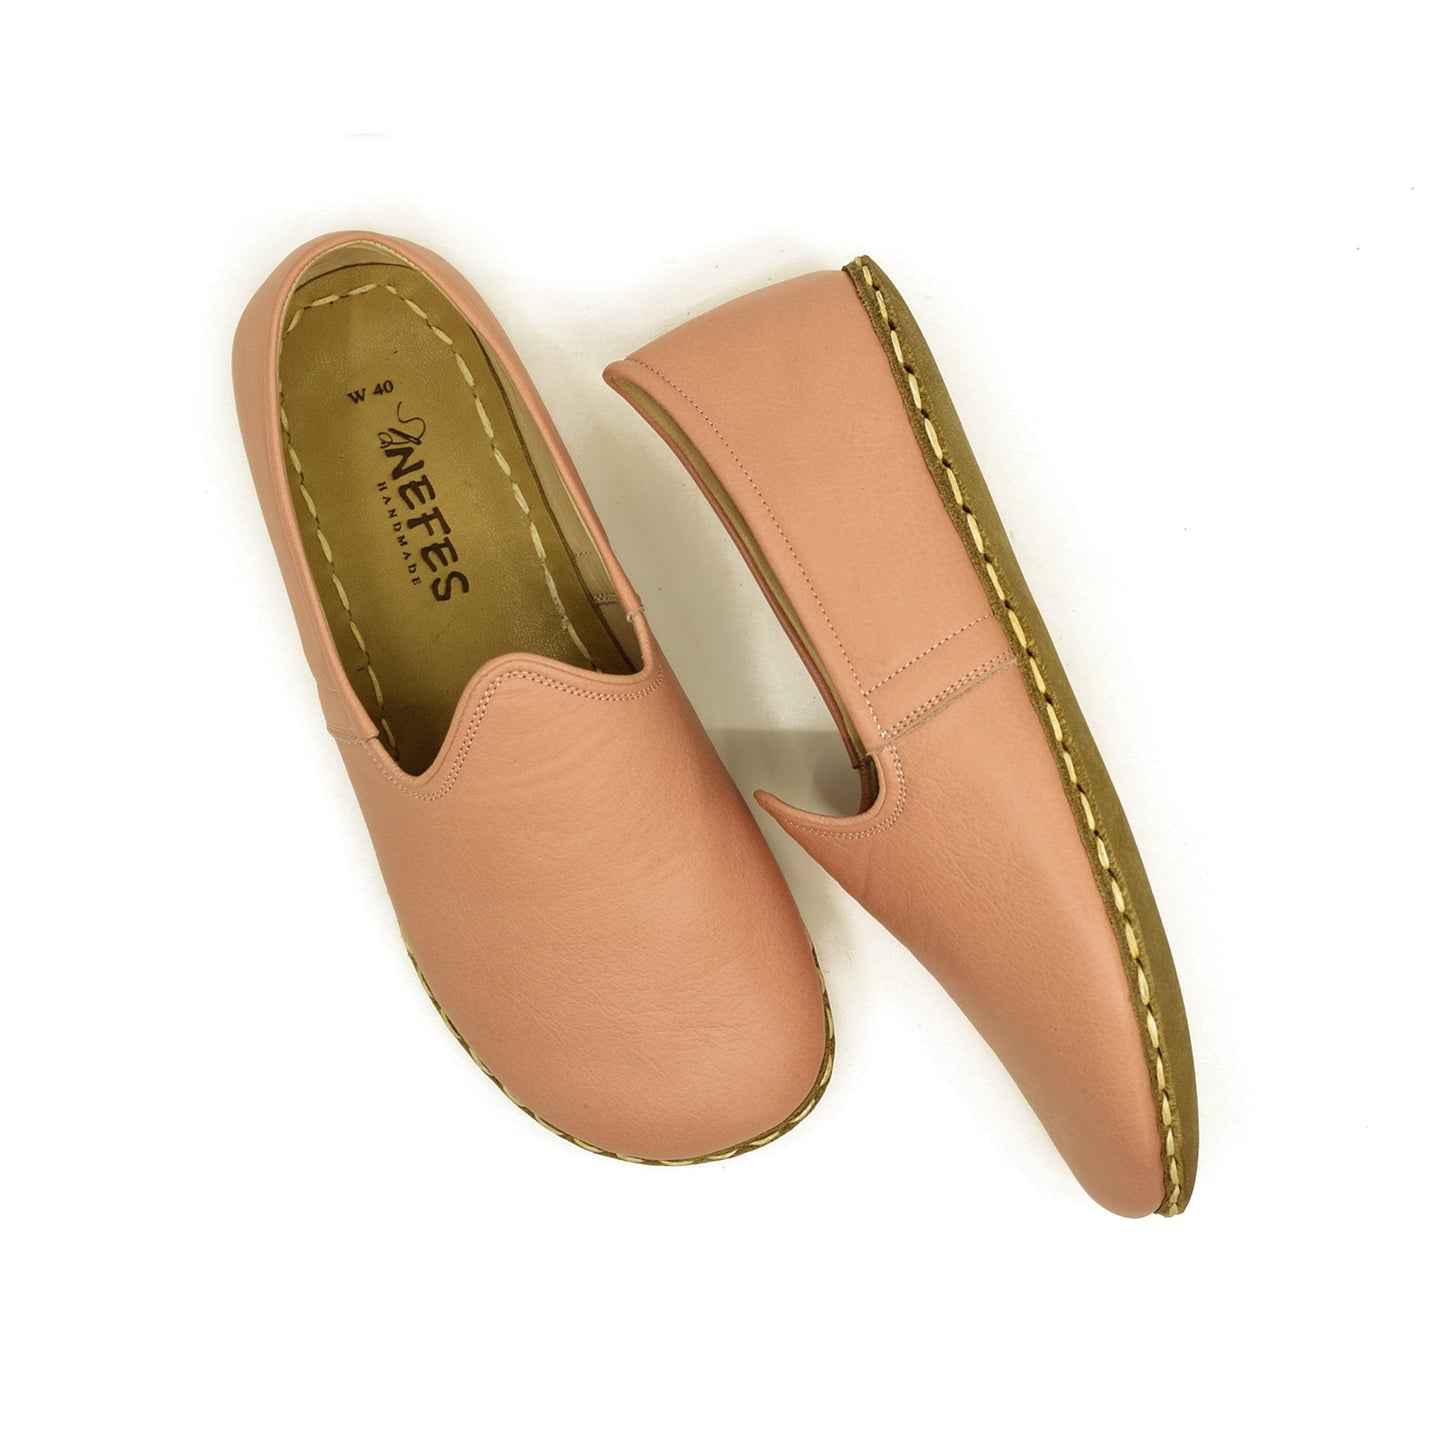 Women - Handmade - Barefoot - Leather Shoes, Calssic - Light Pink